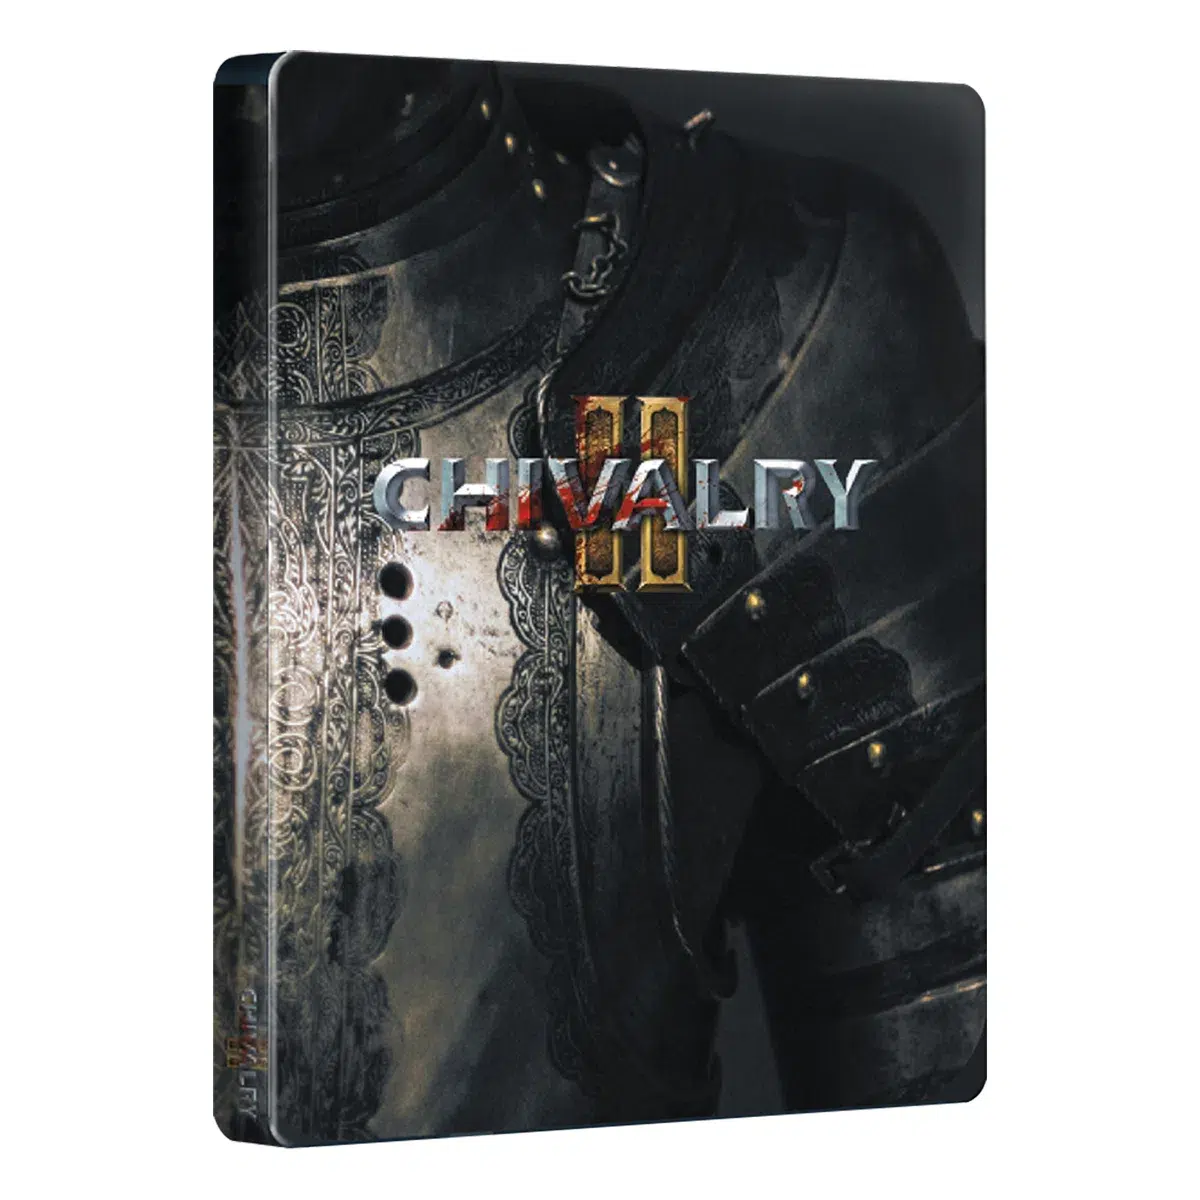 Chivalry 2 Steelbook Edition - PS4